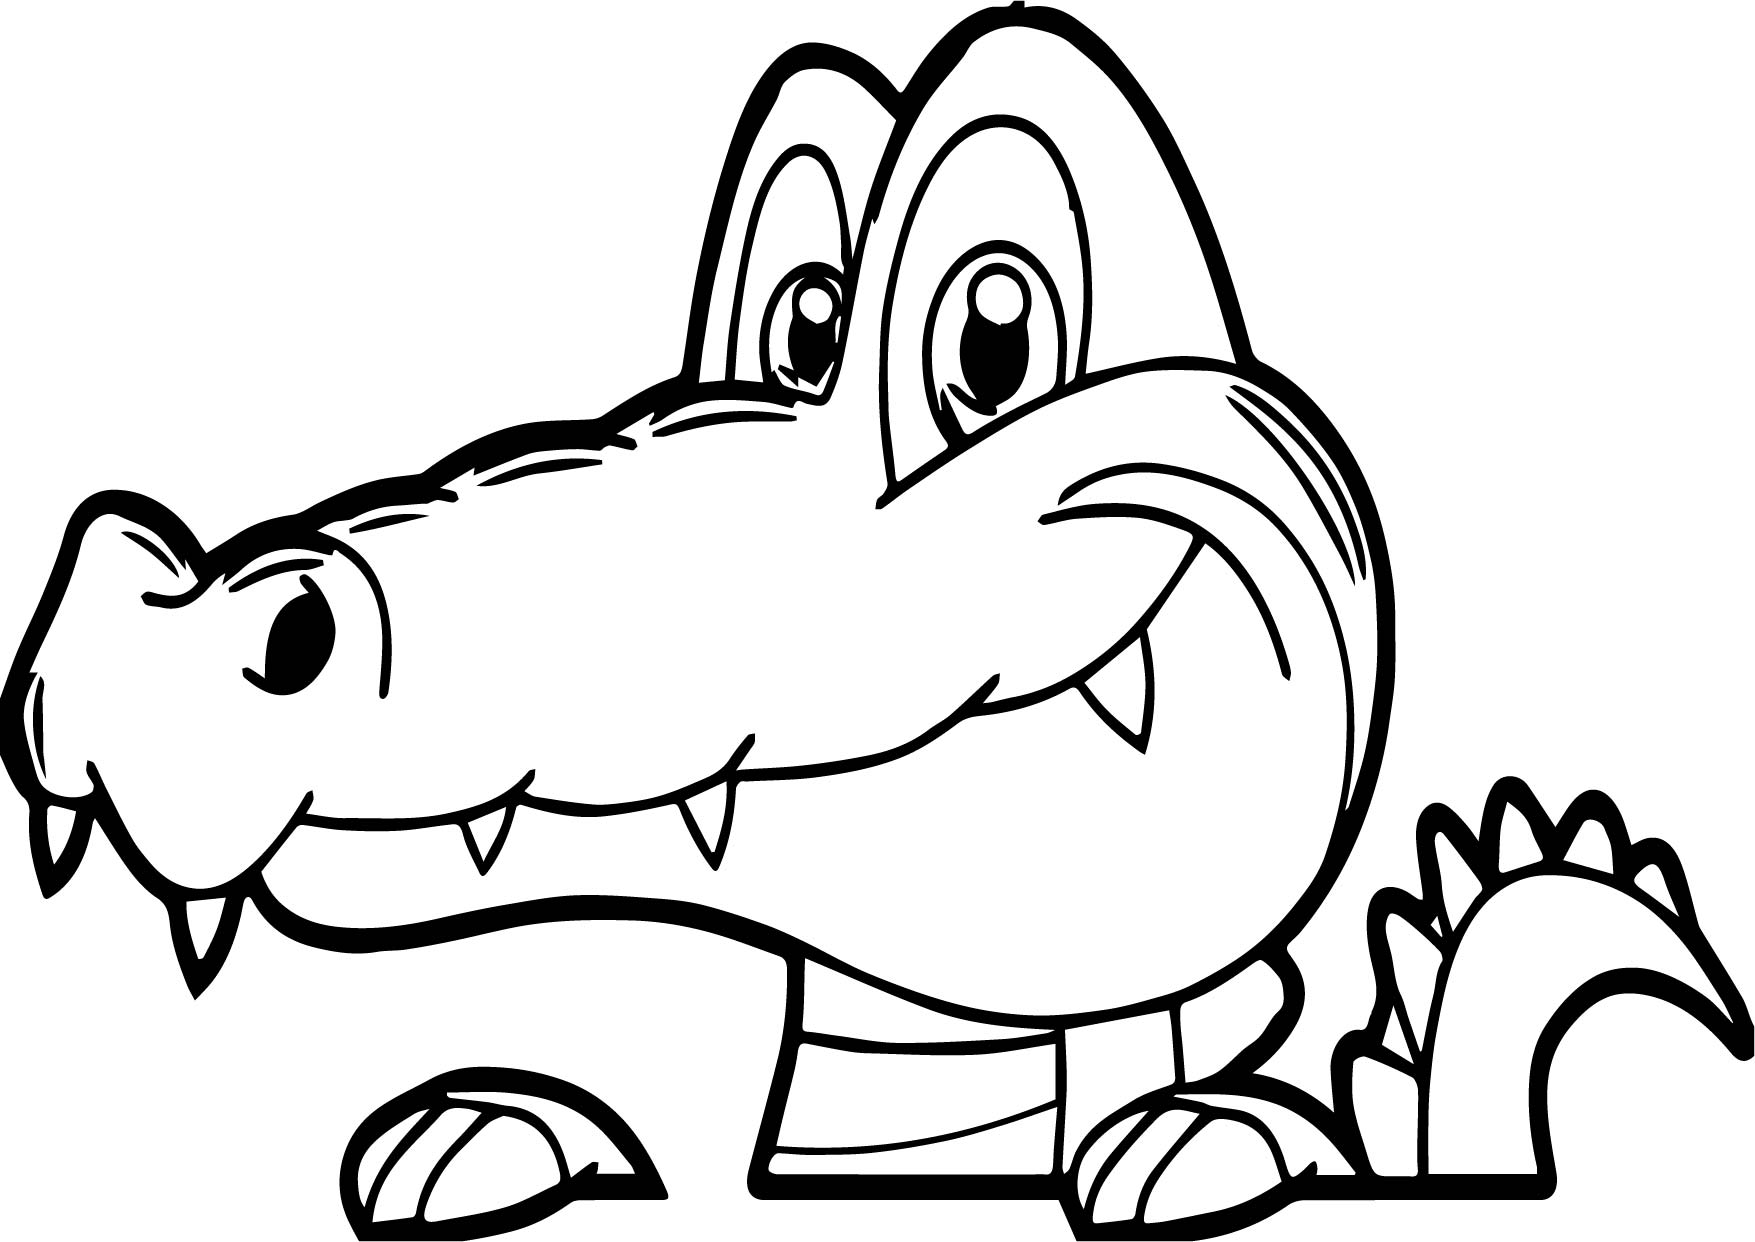 alligator-head-drawing-at-getdrawings-free-download